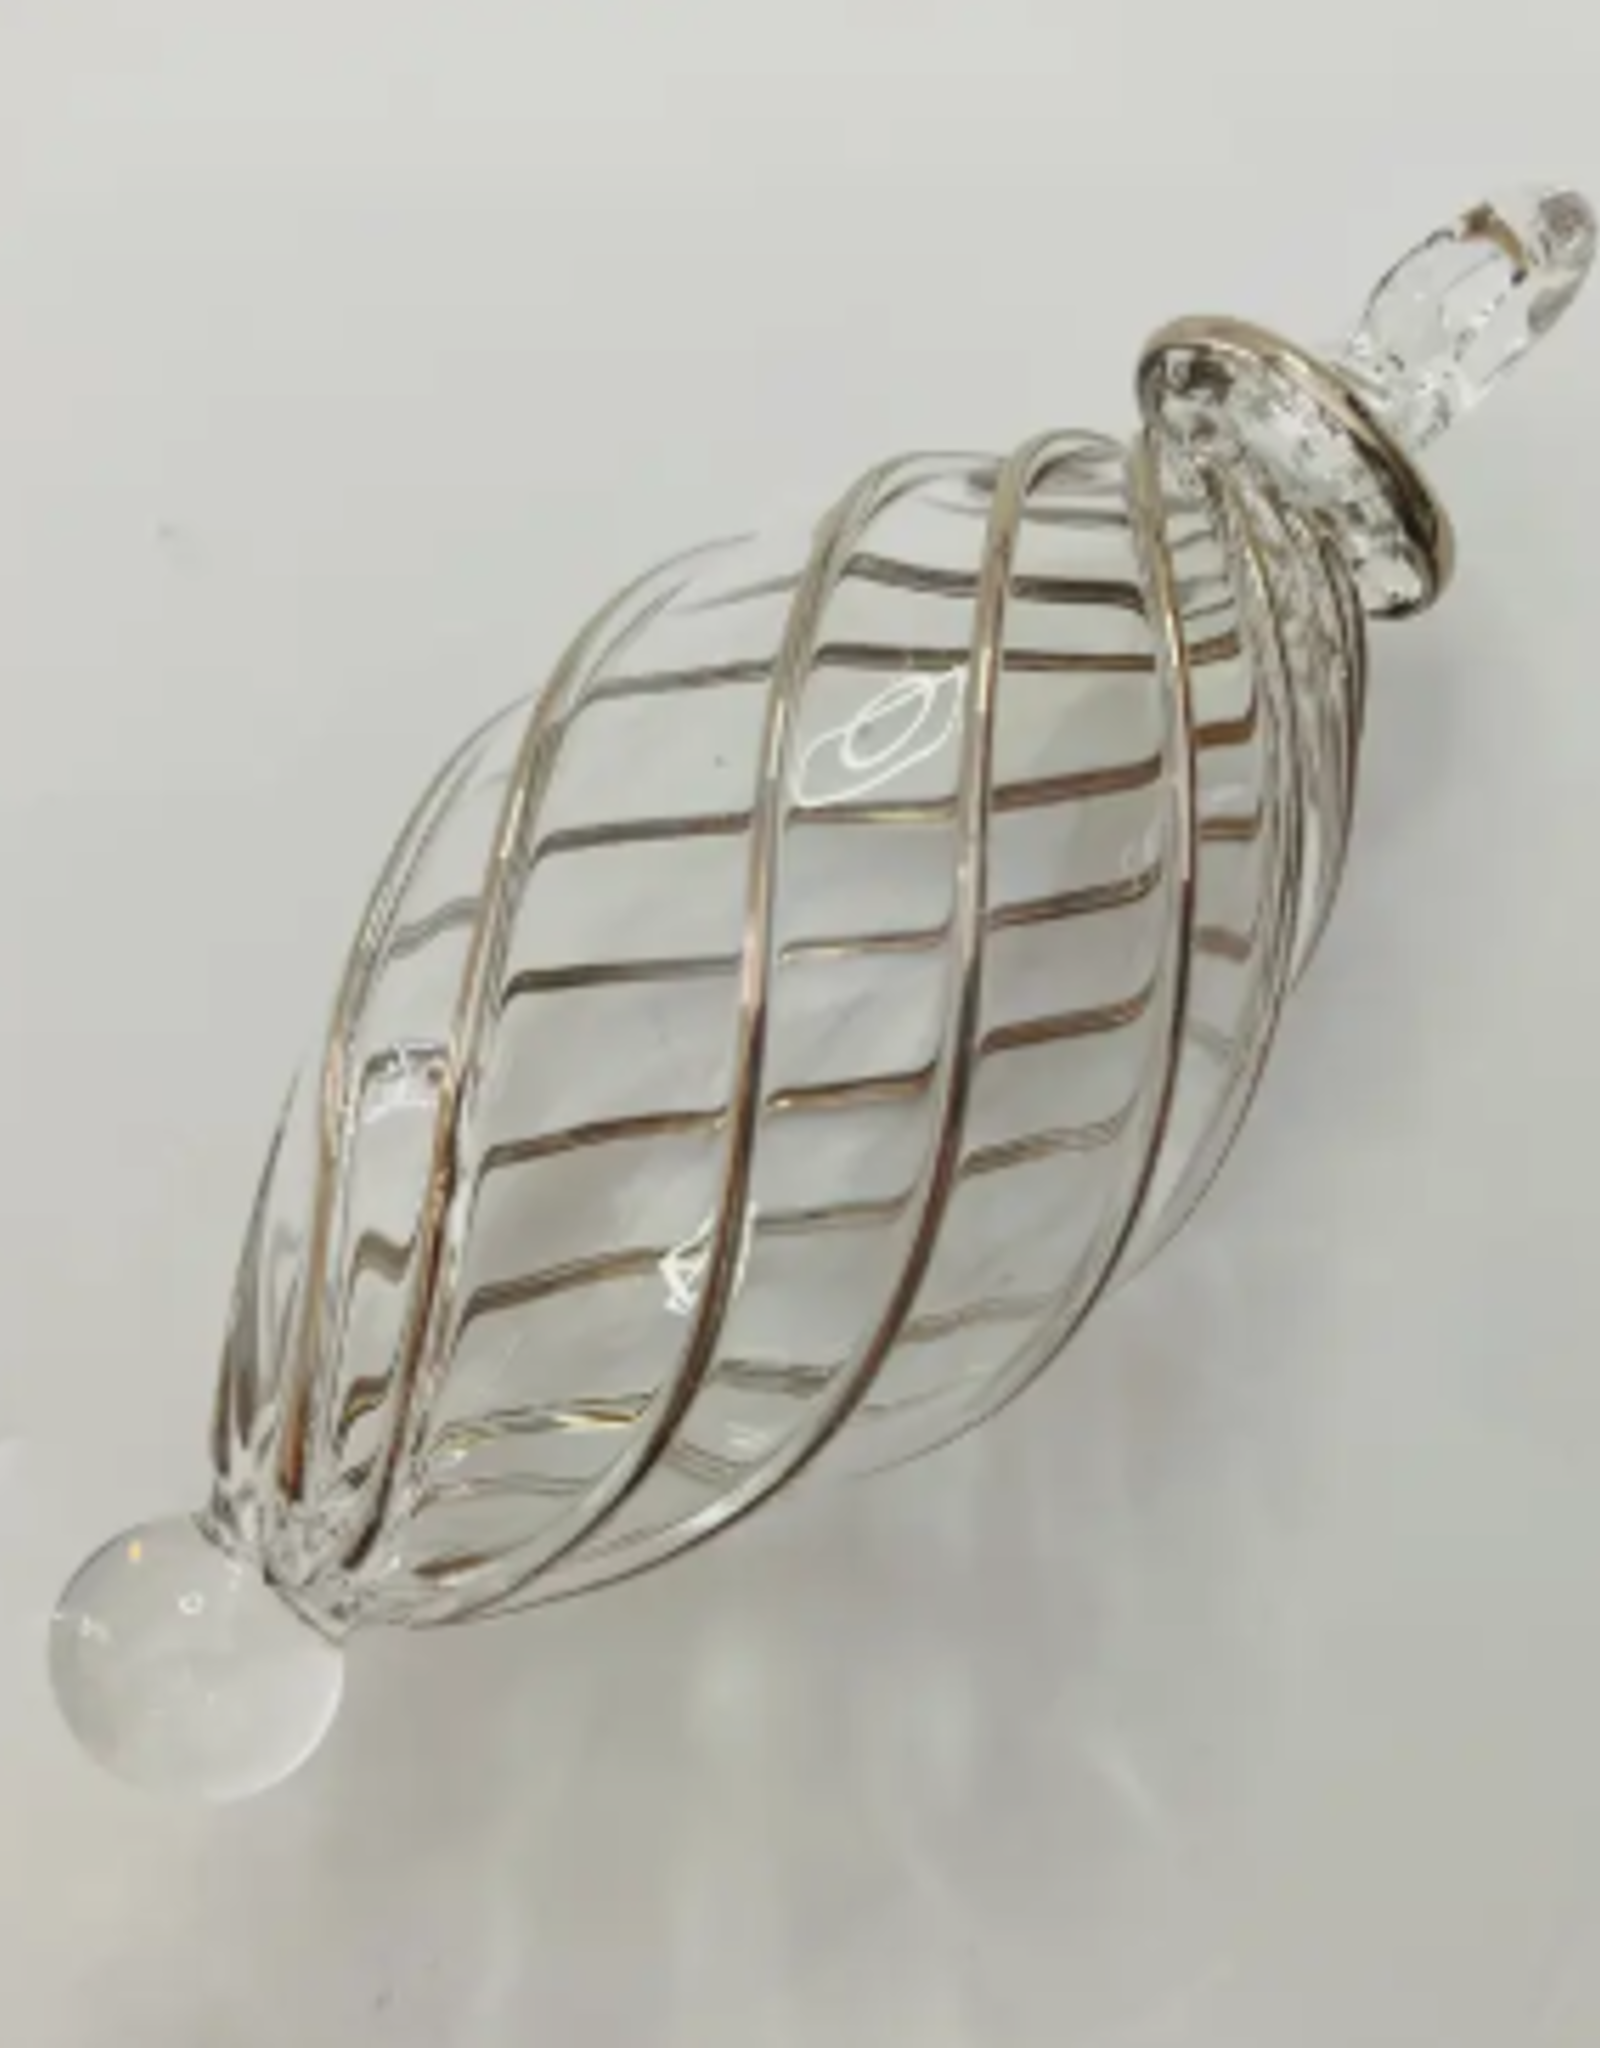 Dandarah Small Blown Glass Ornament - Silver Swirl Oval